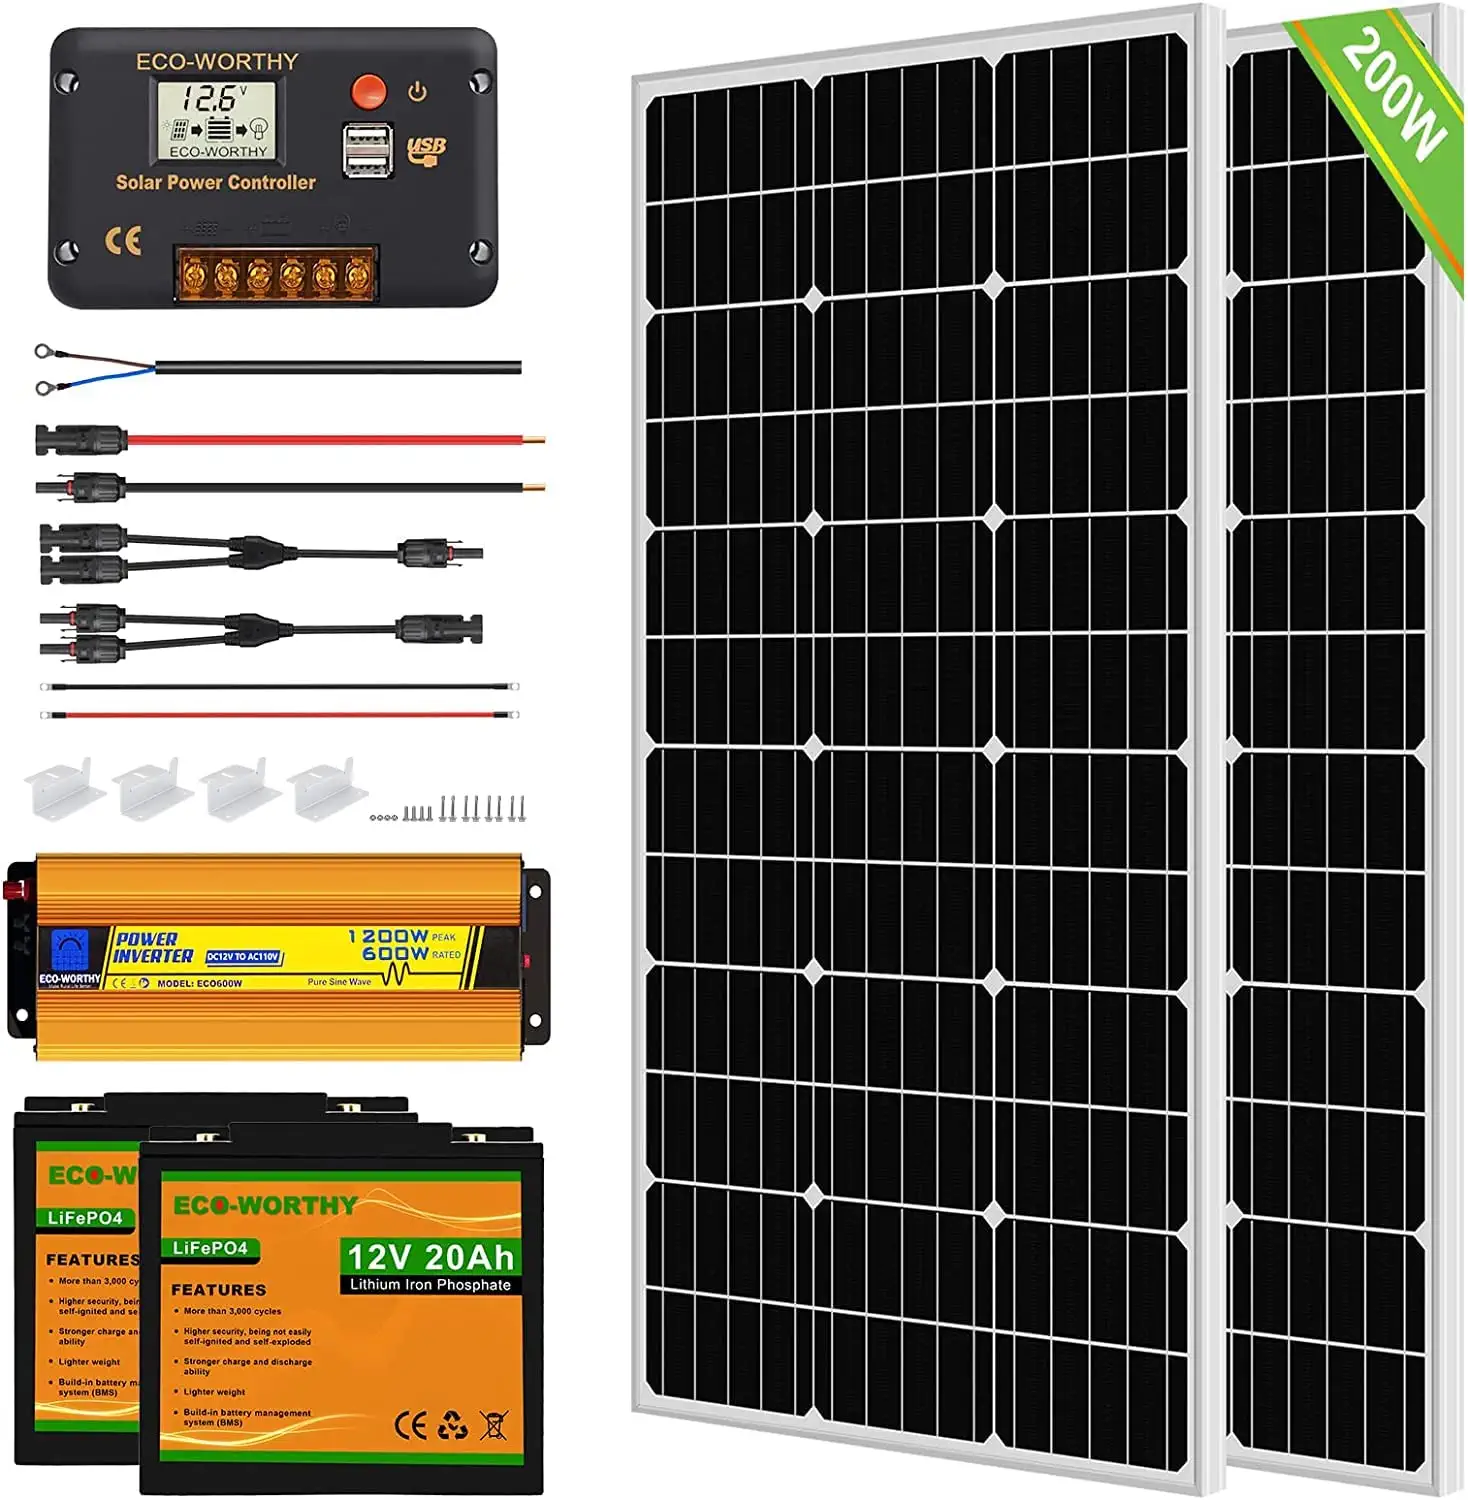 eco-worthy solar kit